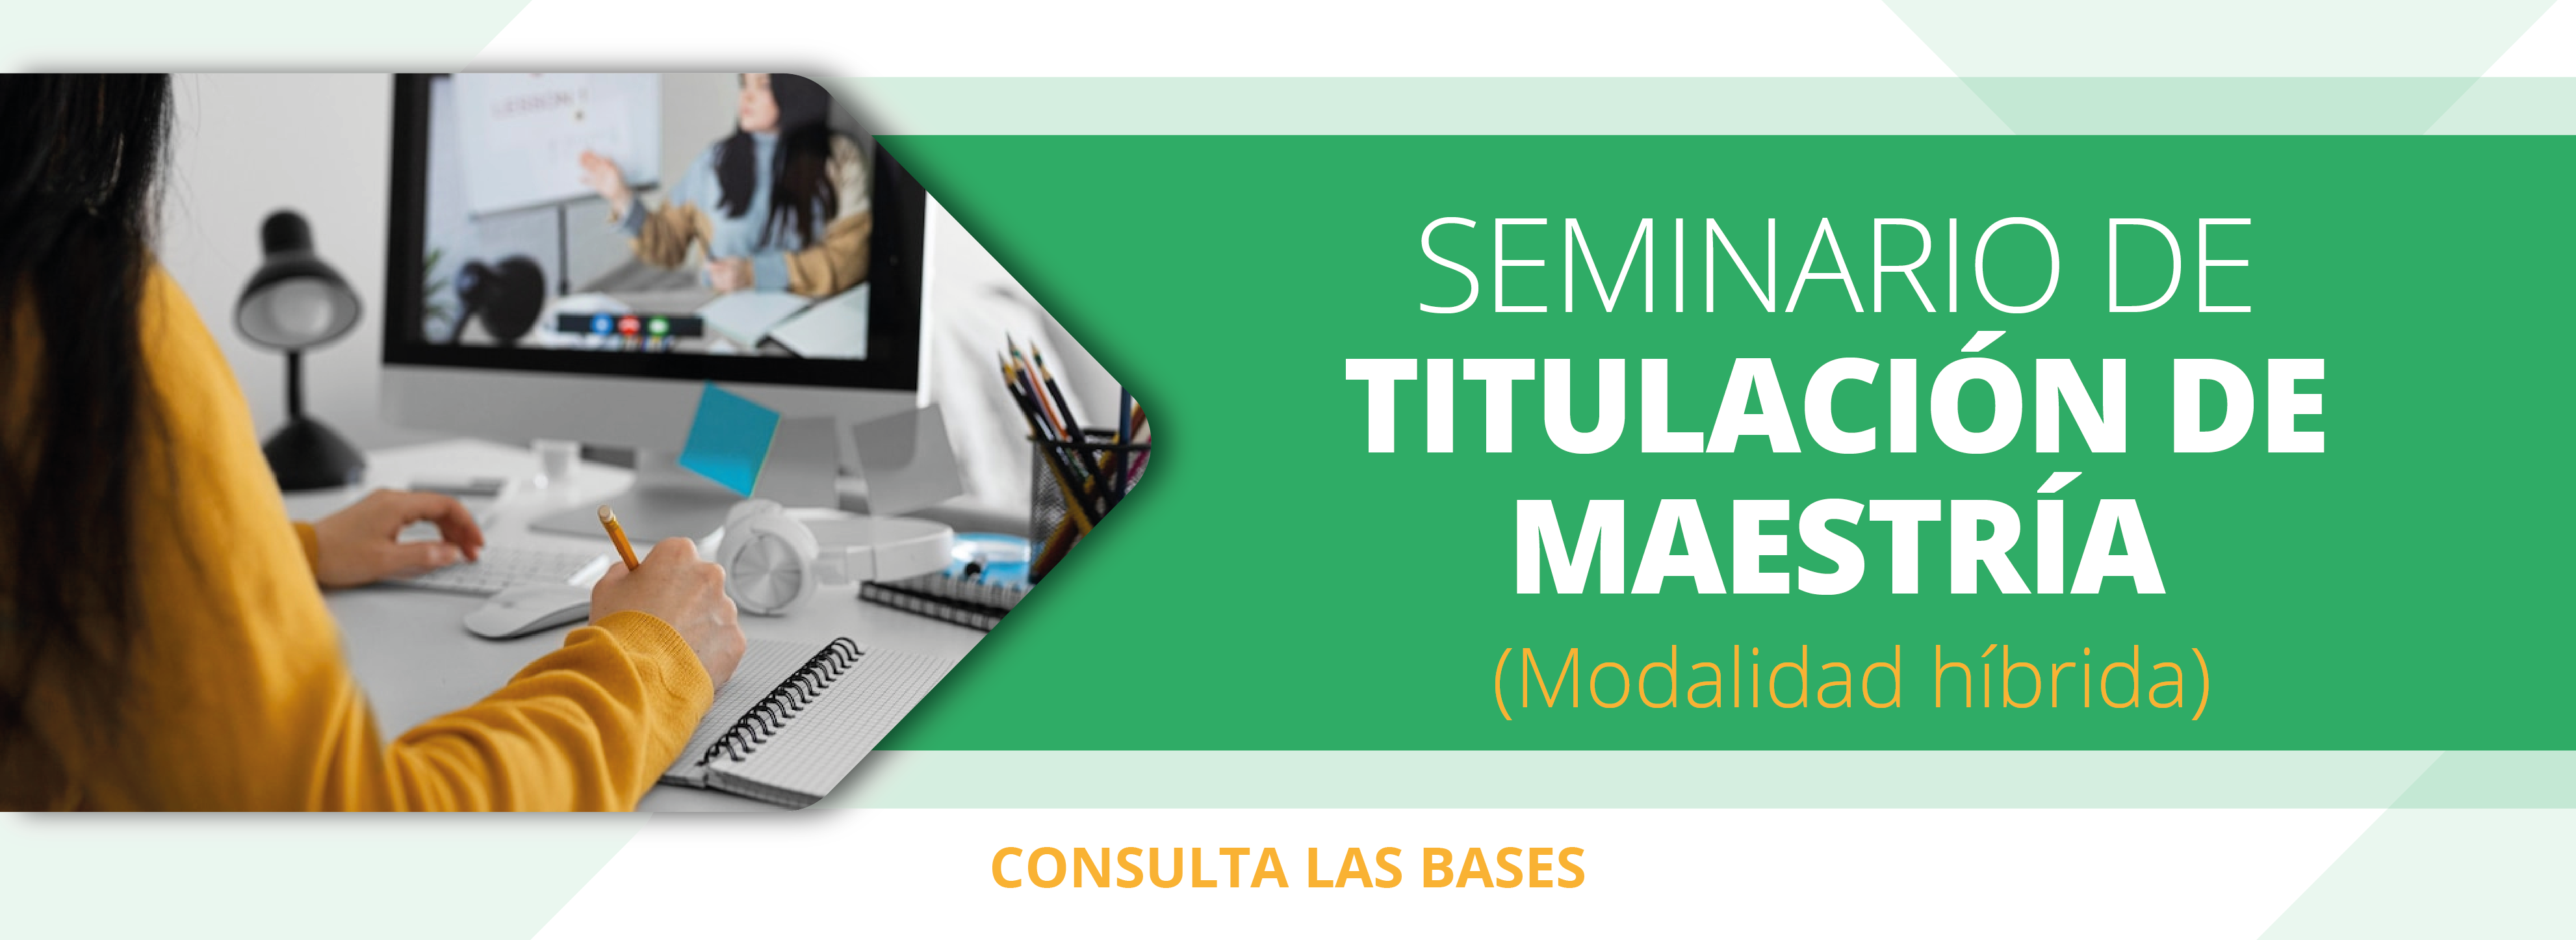 Convocatoria_Seminario_Titulacion_Maestria_en_linea_banner_web